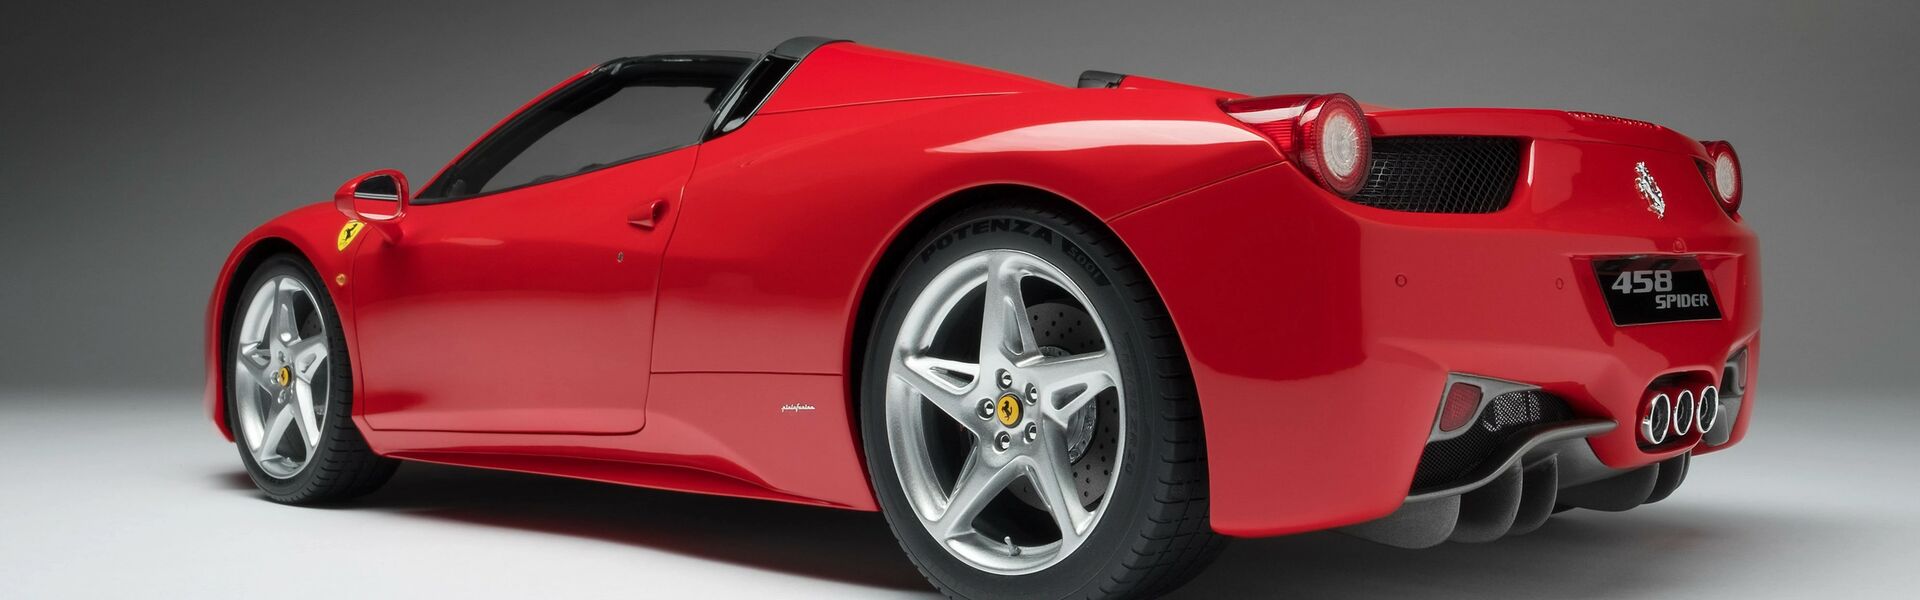 Disky kol/ pneumatiky pro automobil Ferrari 458 Italia/458 Spider